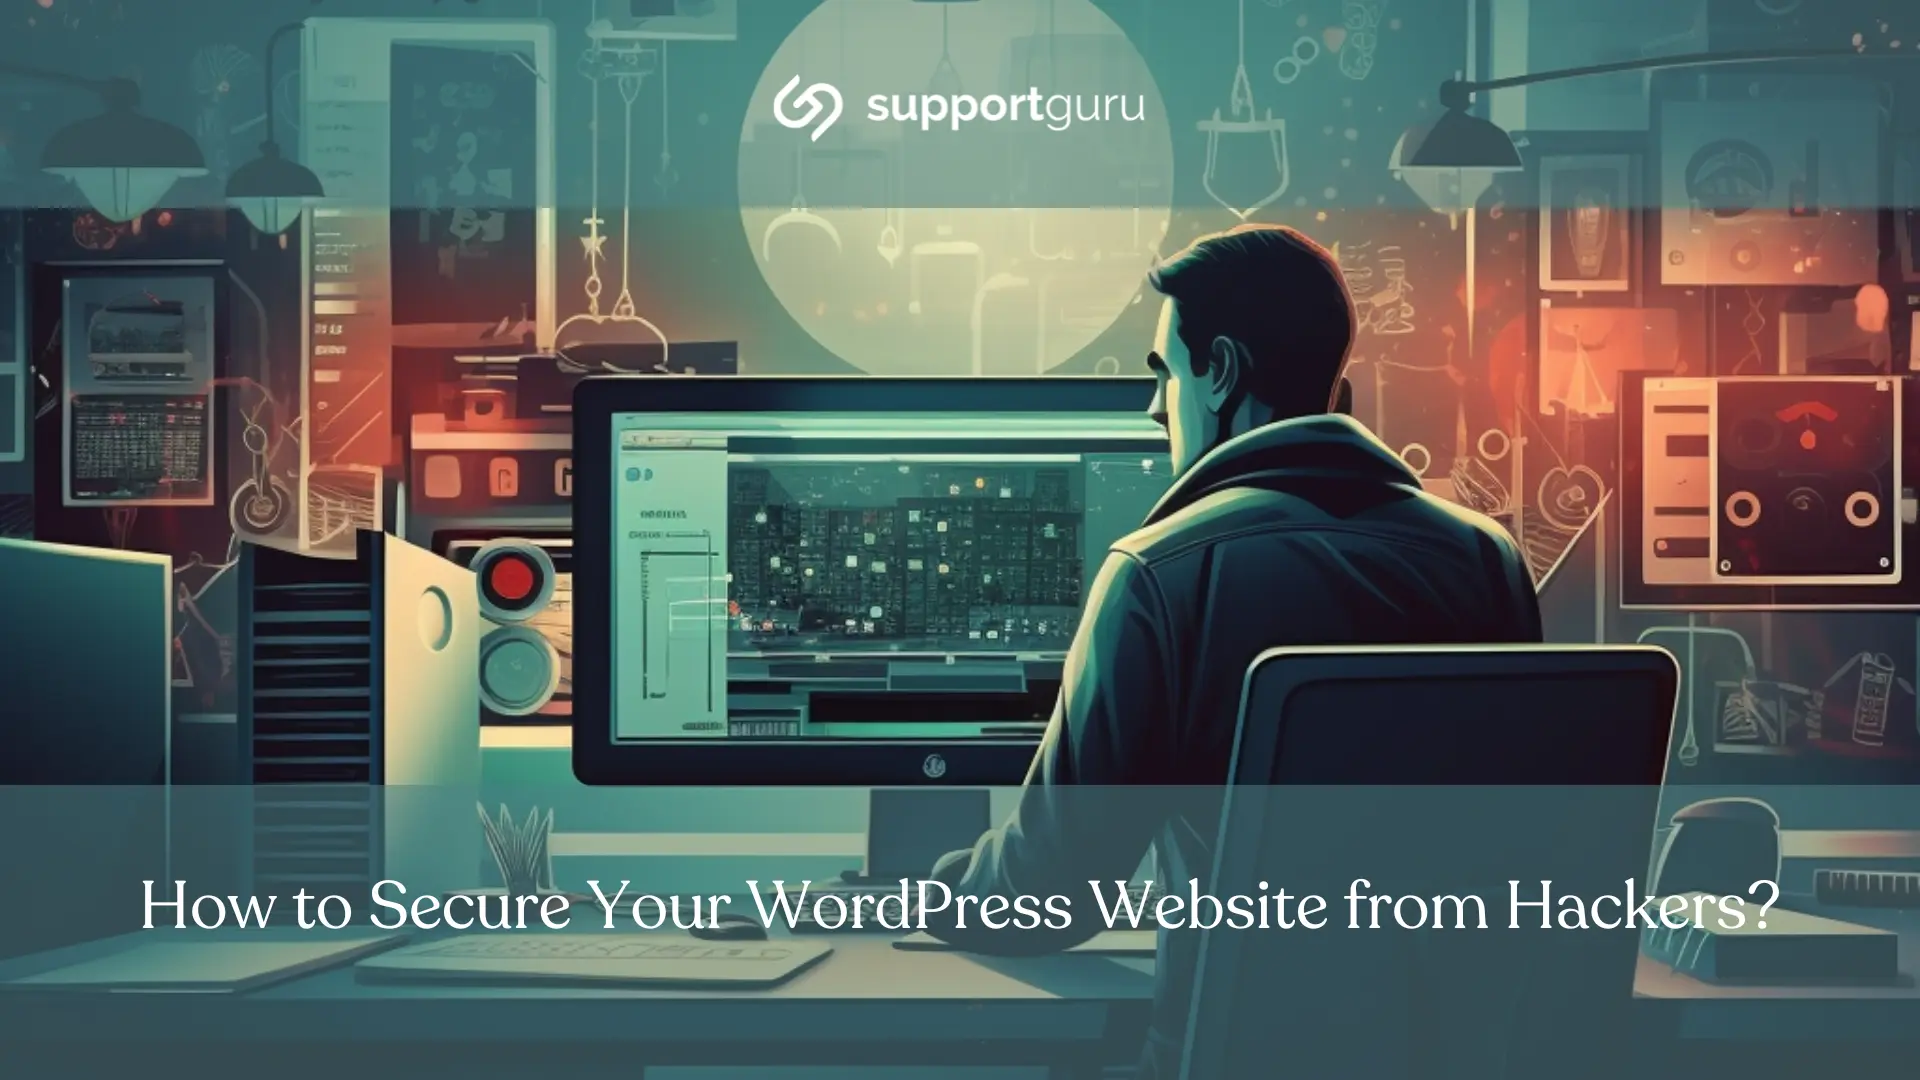 SupportGuru Dev. and Security: Web Hosts with WordPress Wordpress hosting website Web design for wordpress, hosted wordpress site